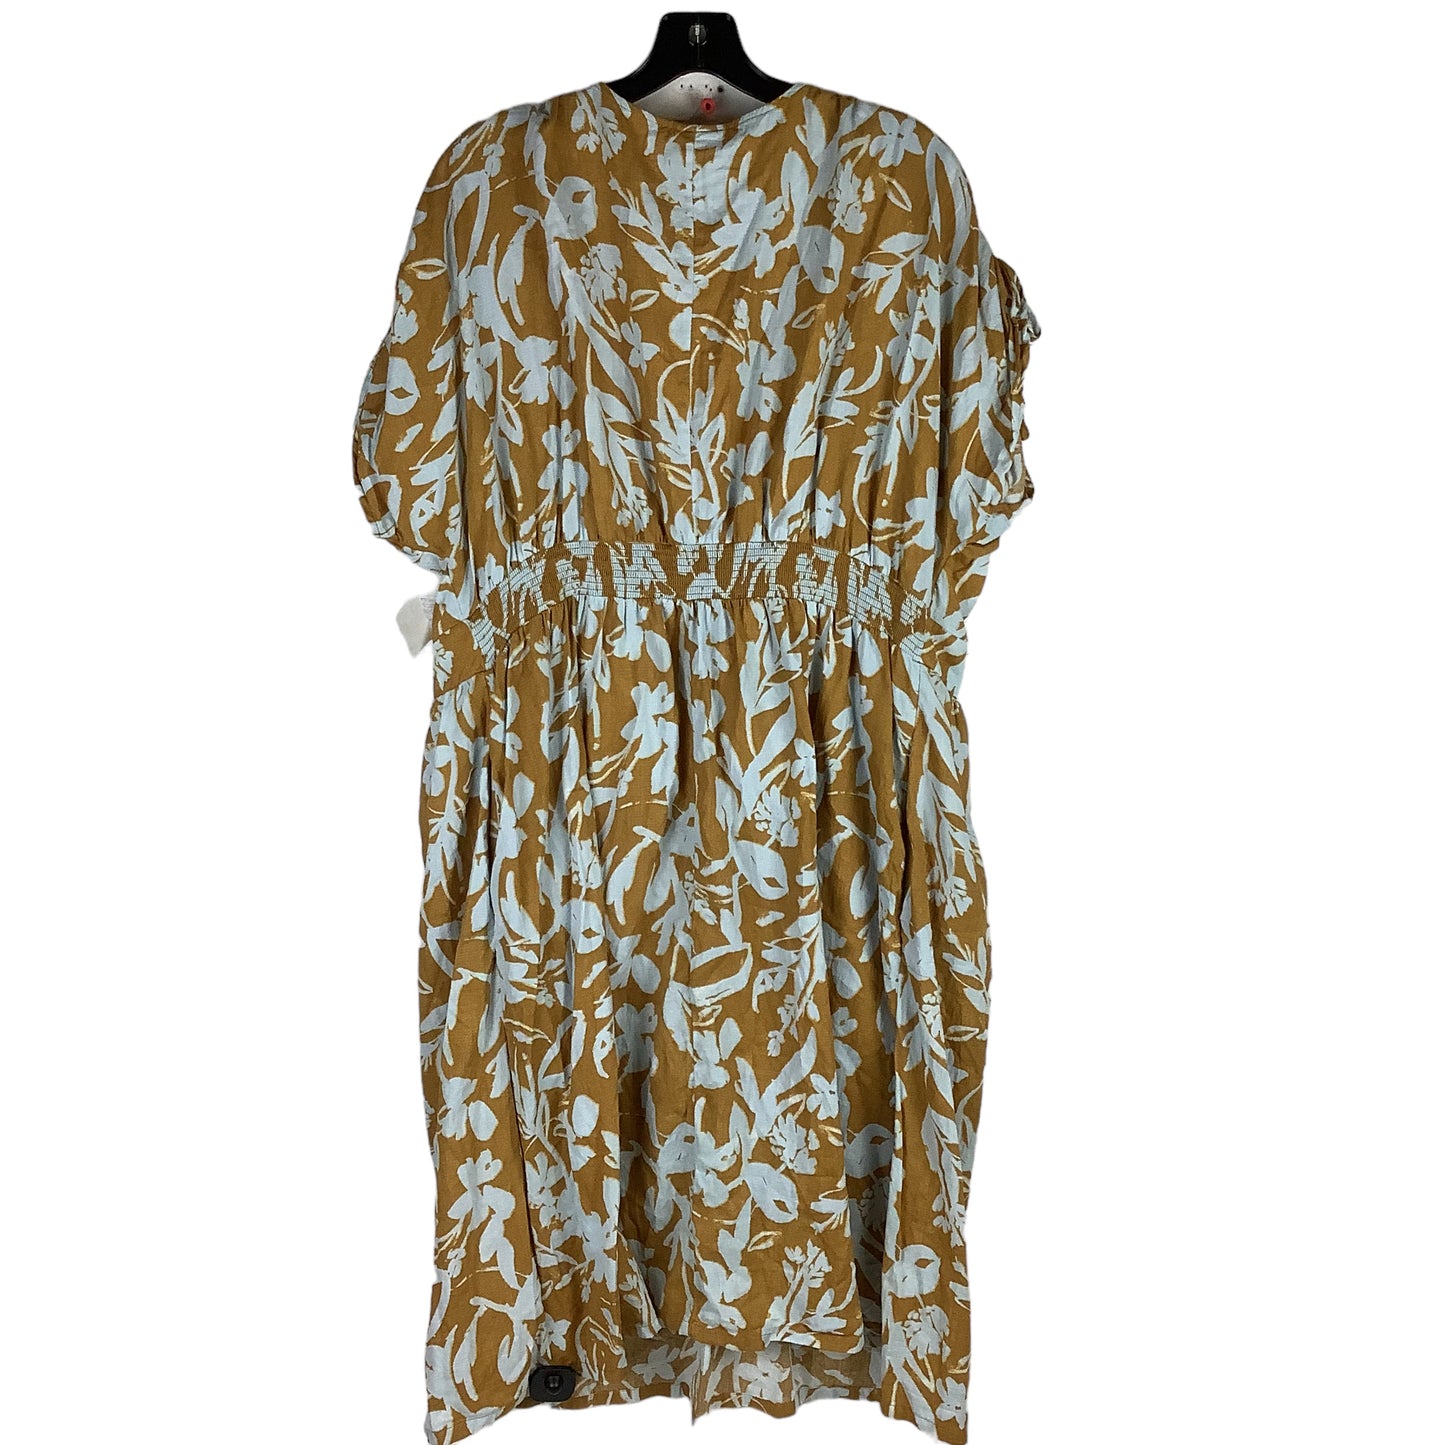 Dress Casual Maxi By Ava & Viv  Size: 2x